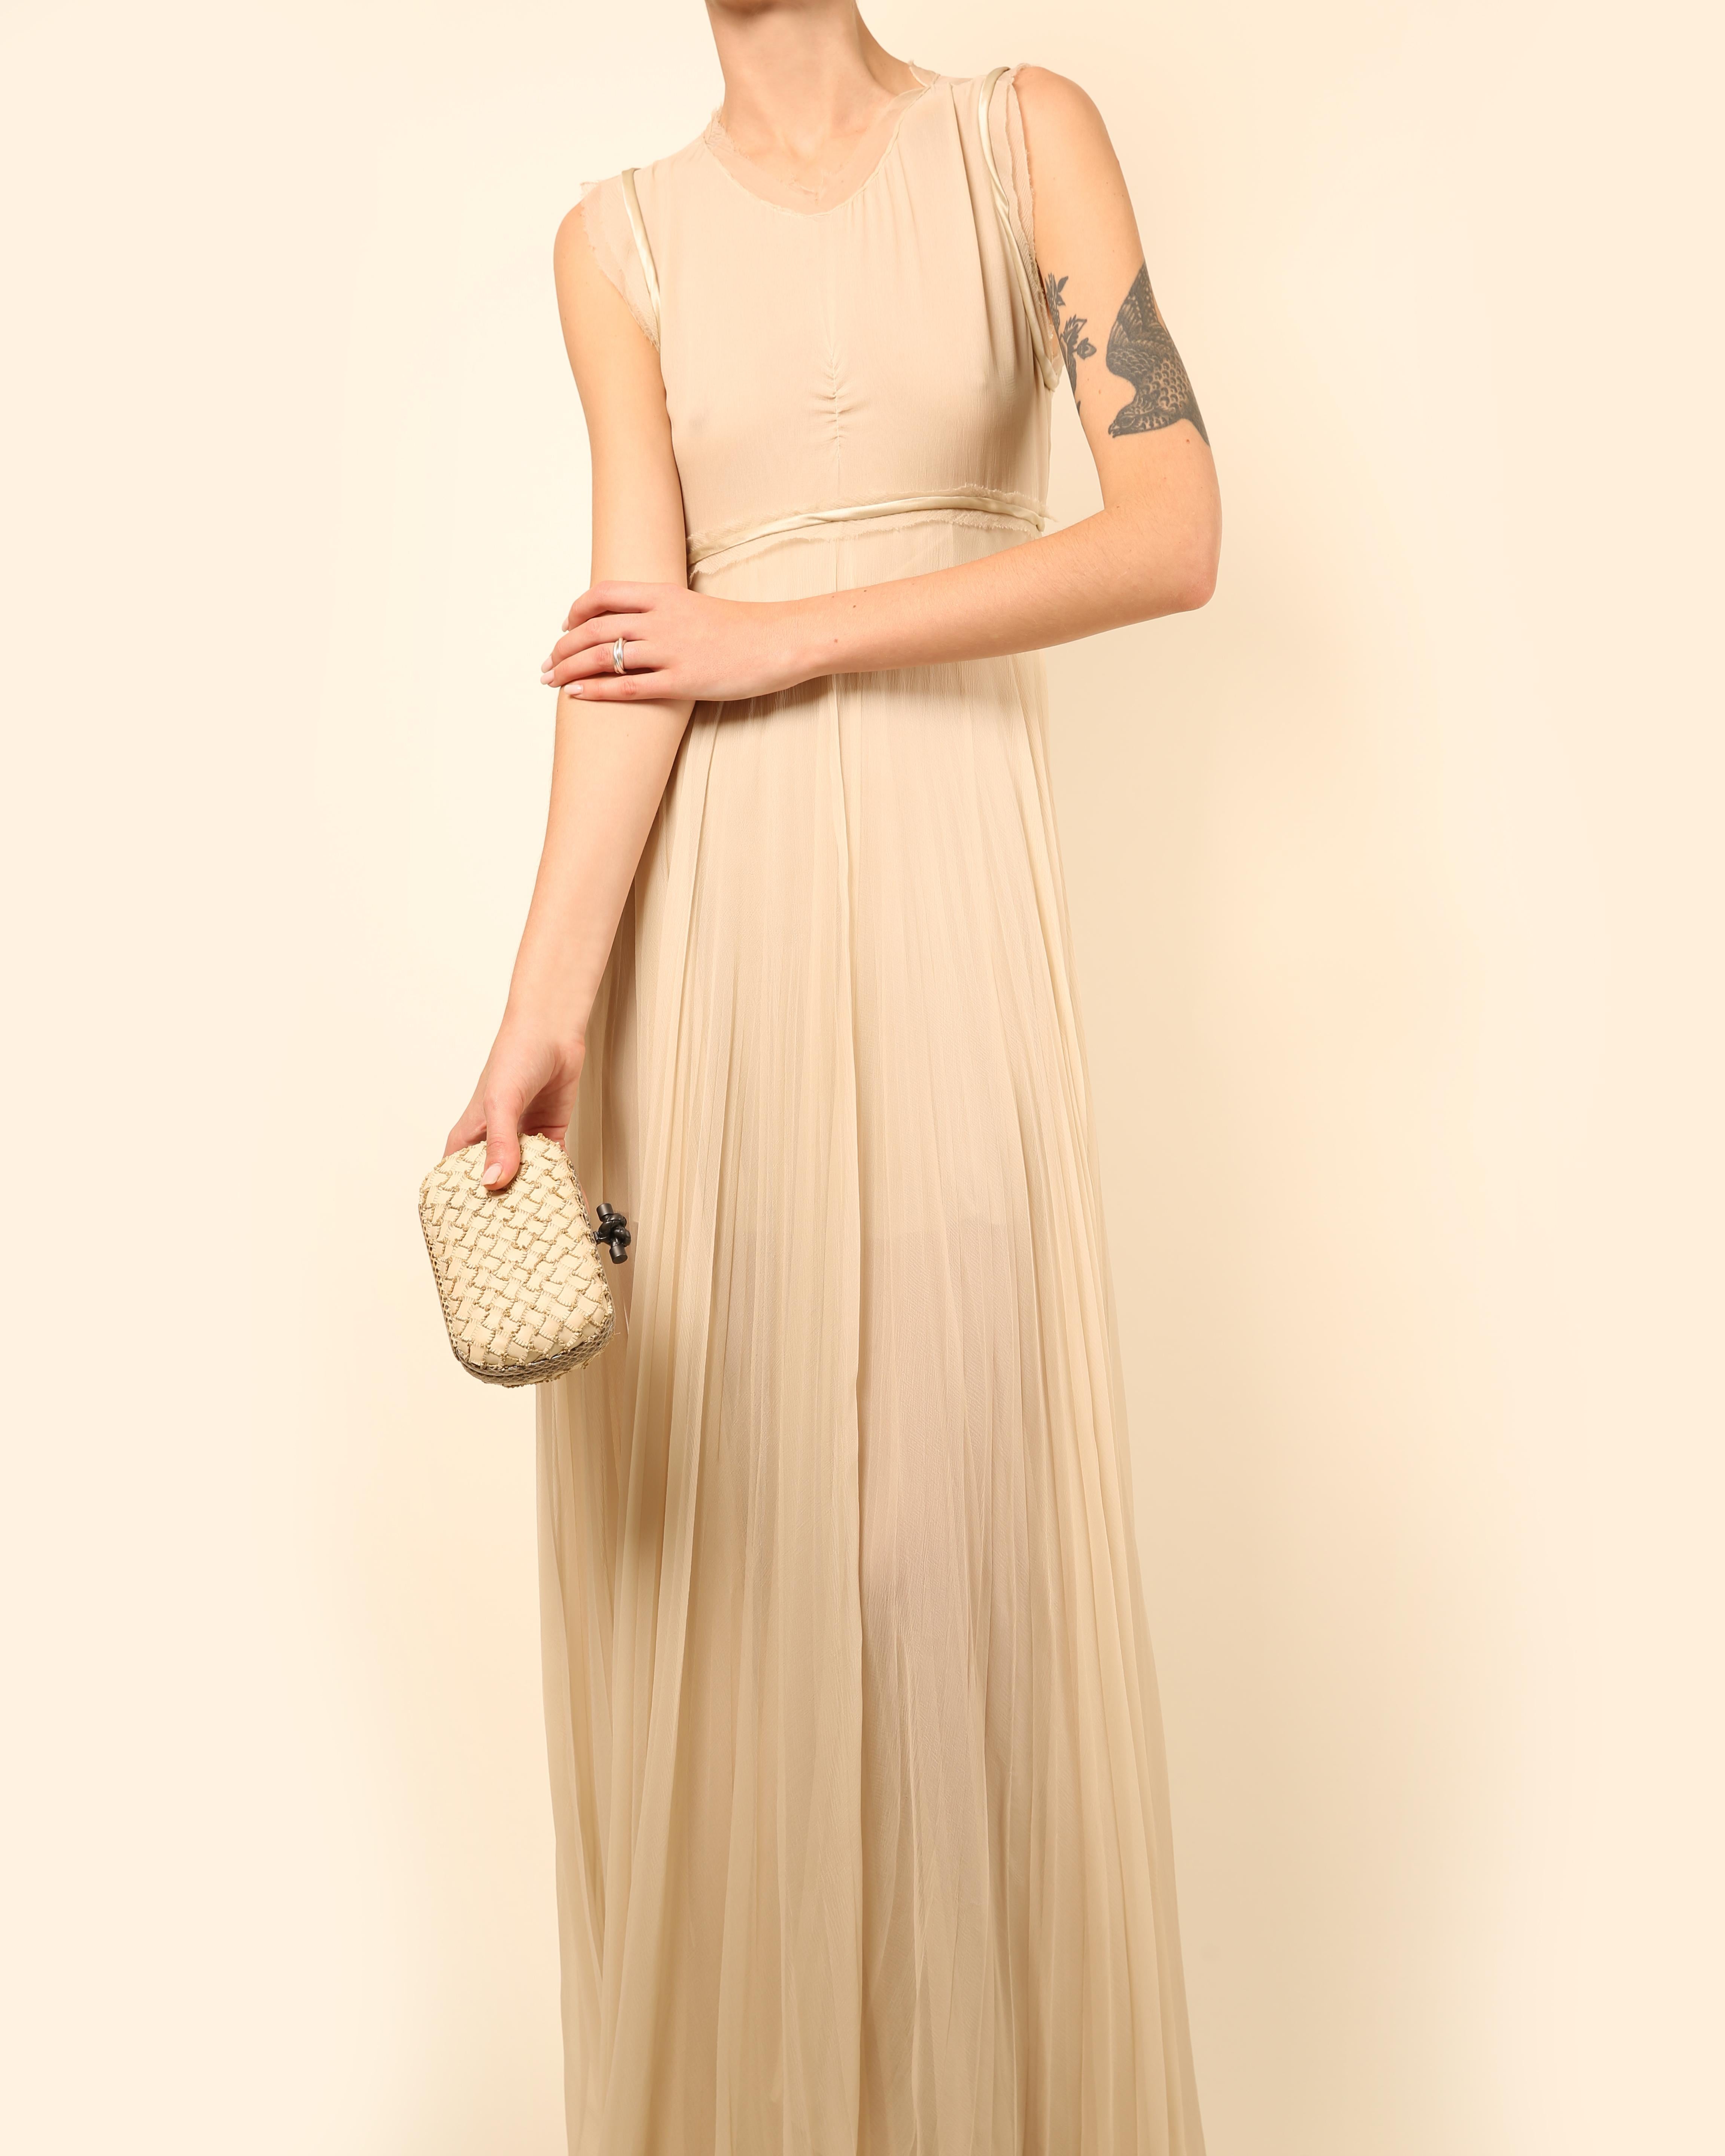 Chloe S/S10 ivory white beige chiffon silk layered sleeveless wedding dress gown For Sale 5